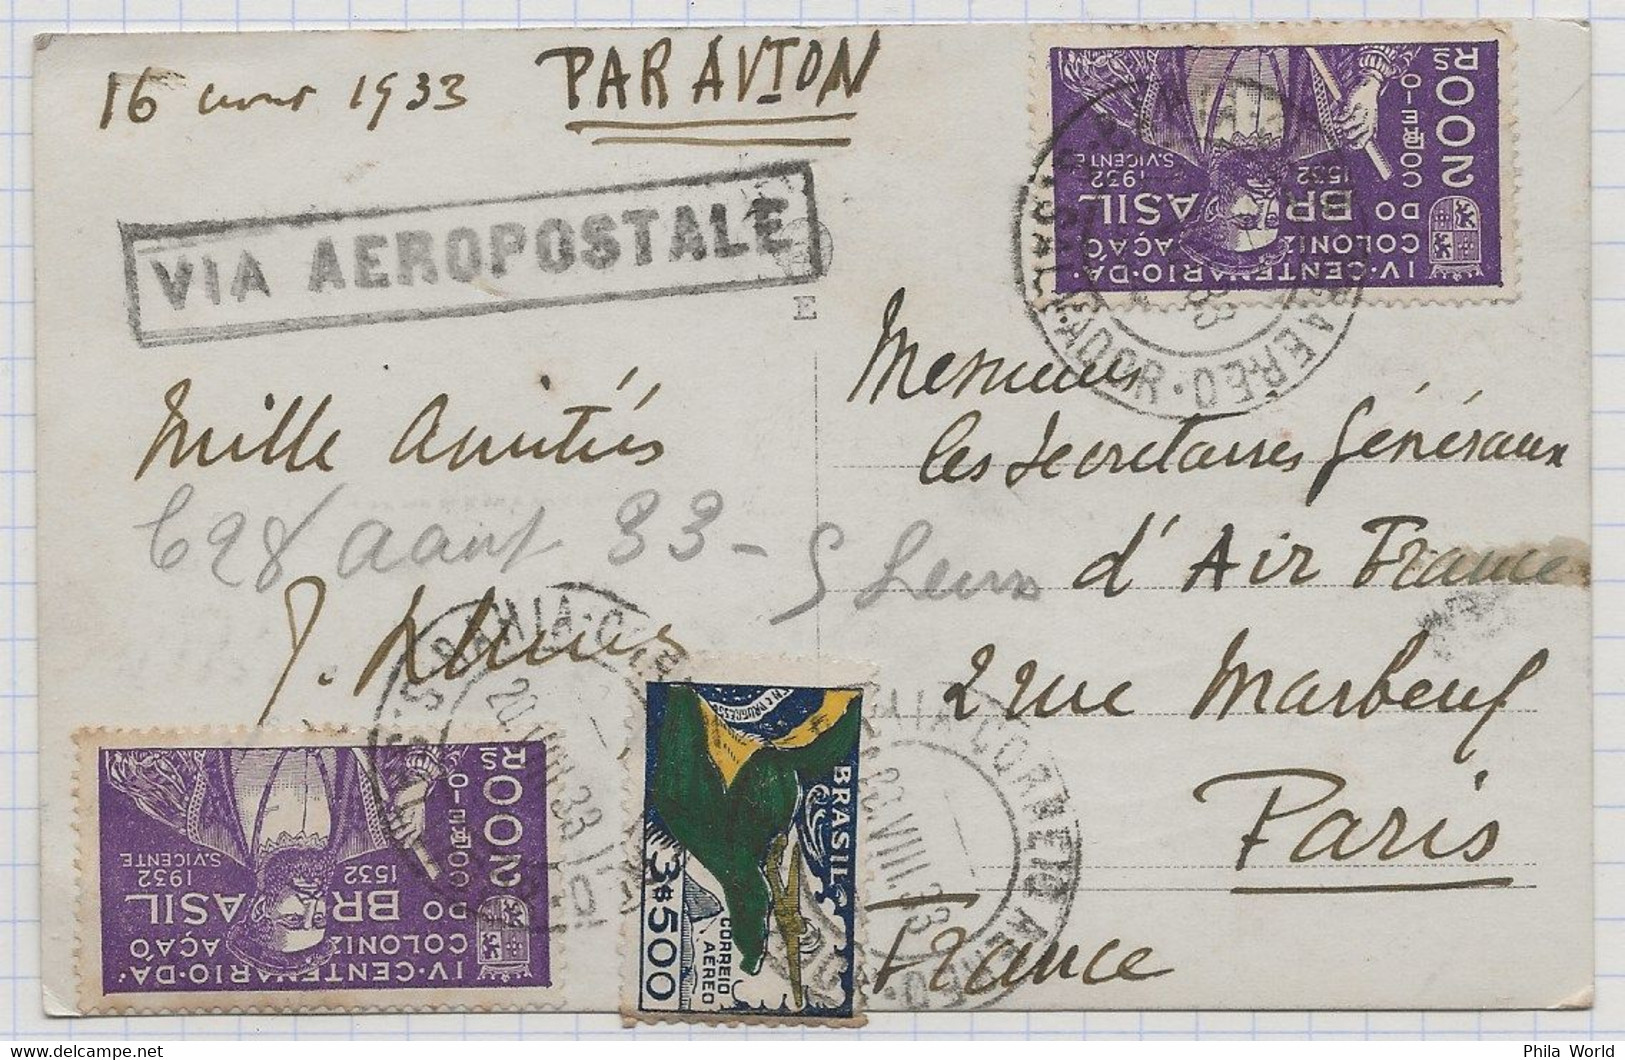 AEROPOSTALE CGA BRESIL RIO DE JANERO 20 AOUT 1933 Pour PARIS FRANCE Par Avion Correo Aereo - Avions